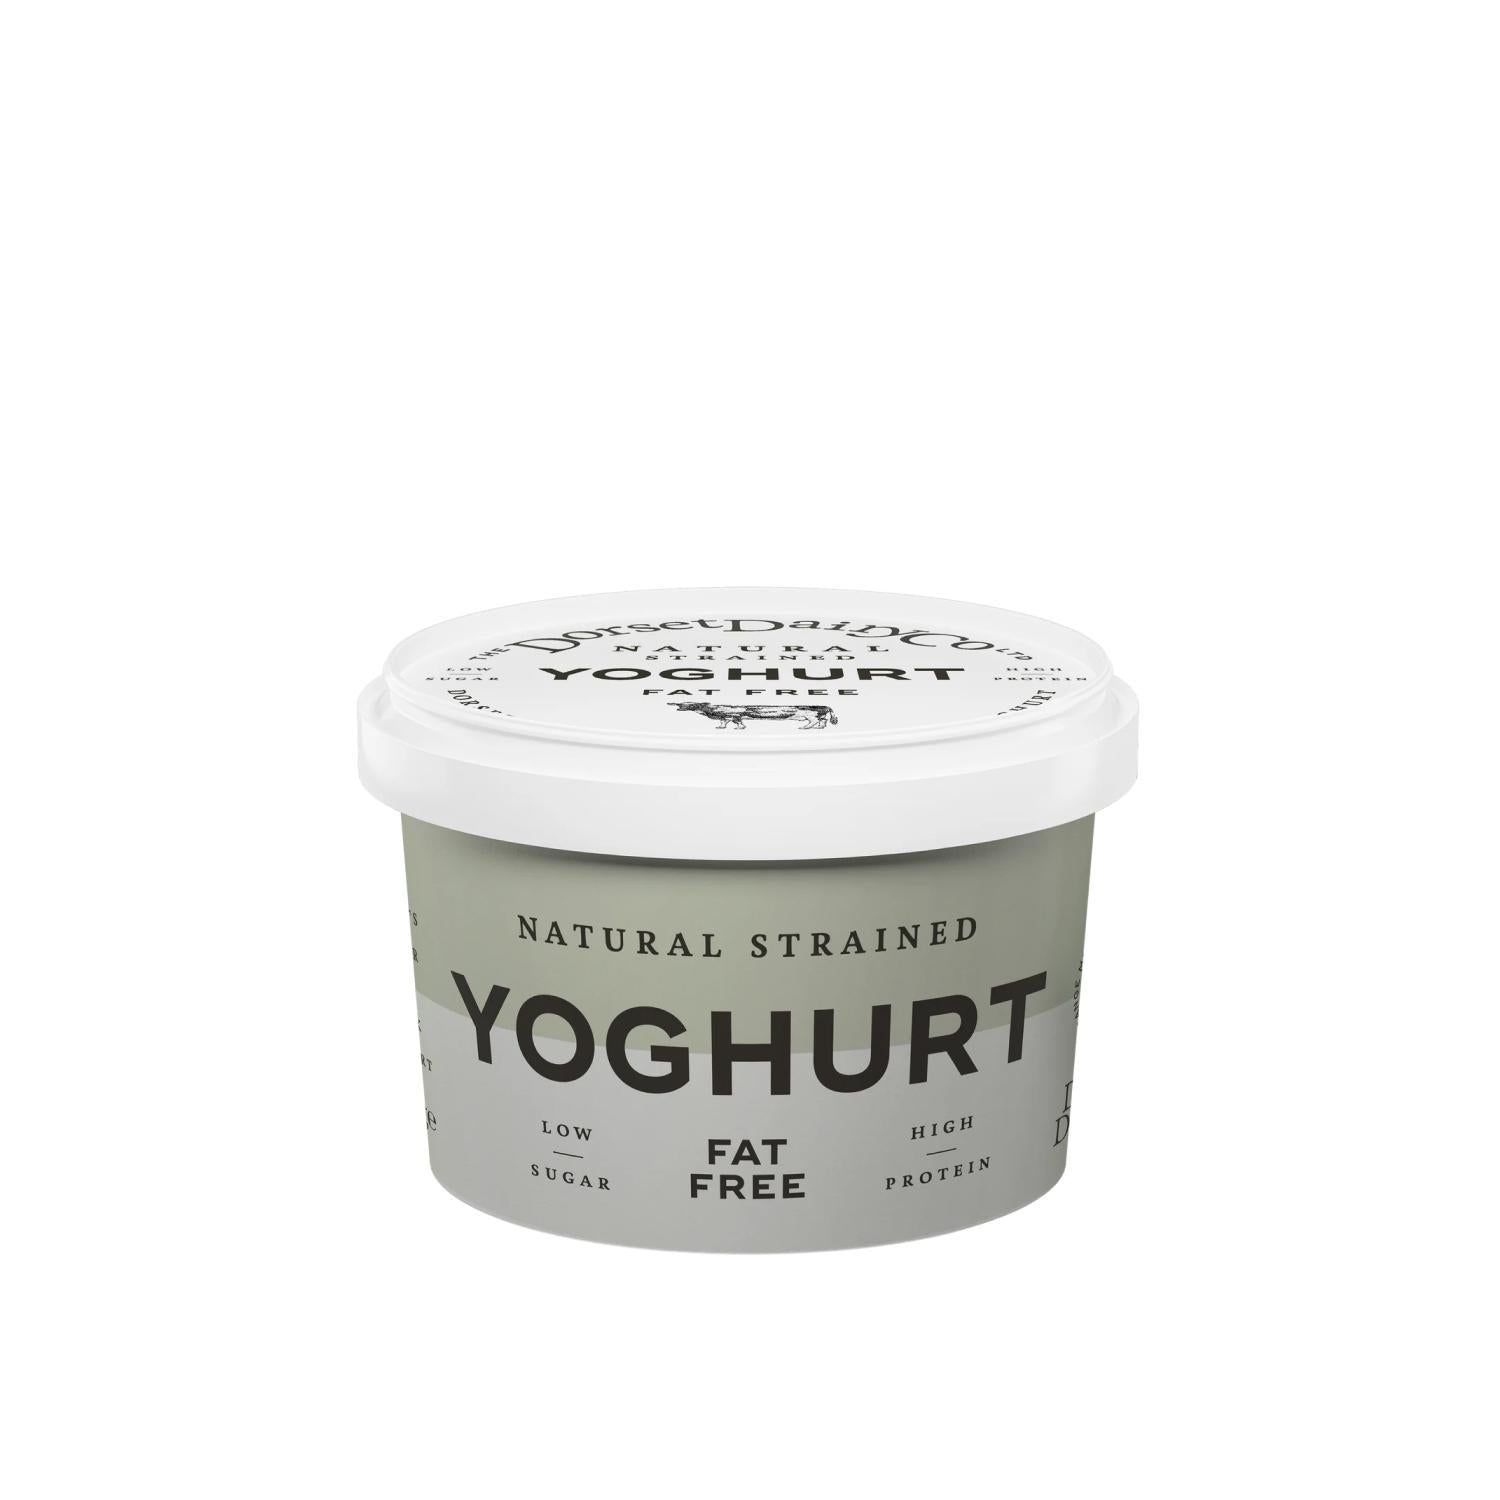 Dorset Dairy - Strained Yoghurt (No Fat)